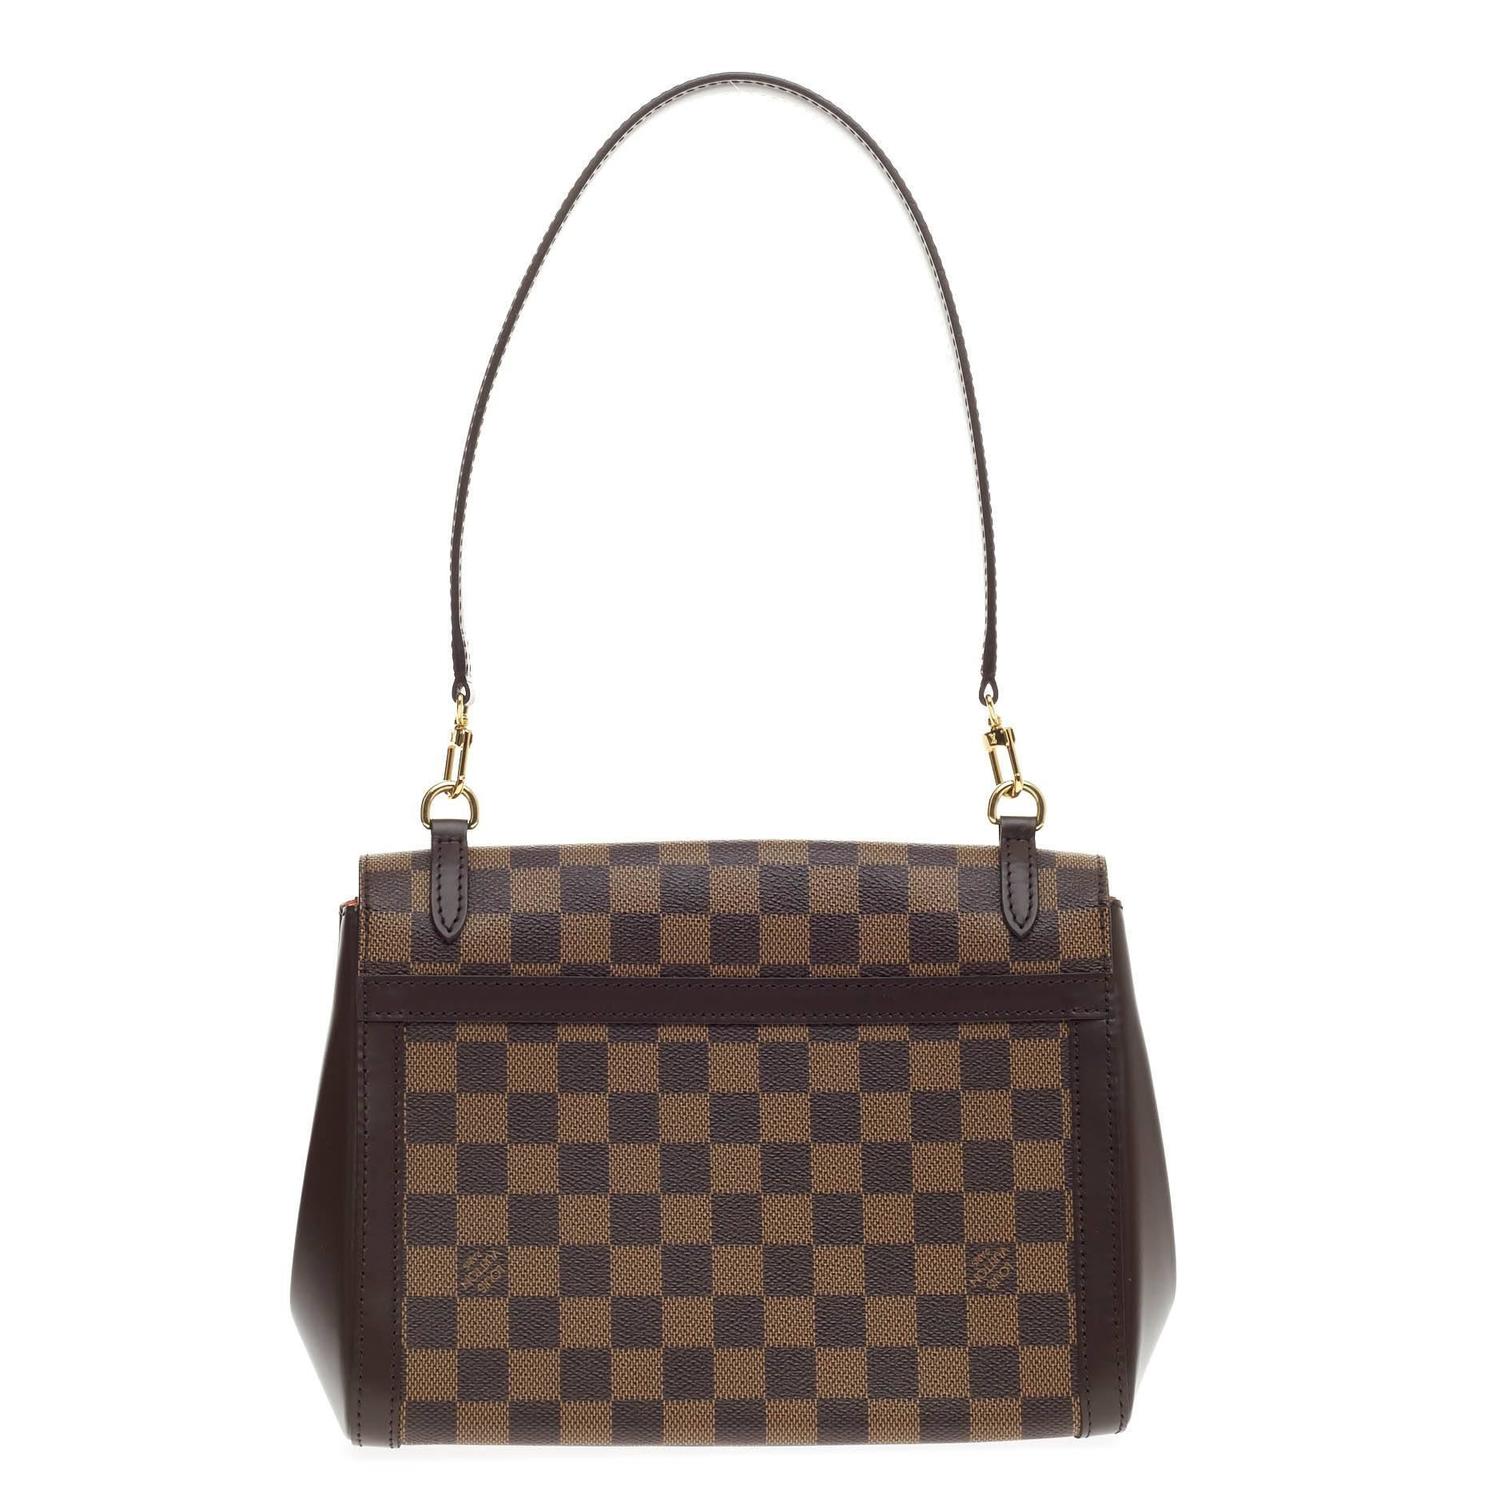 Louis Vuitton Venice Shoulder Bag Damier For Sale at 1stdibs